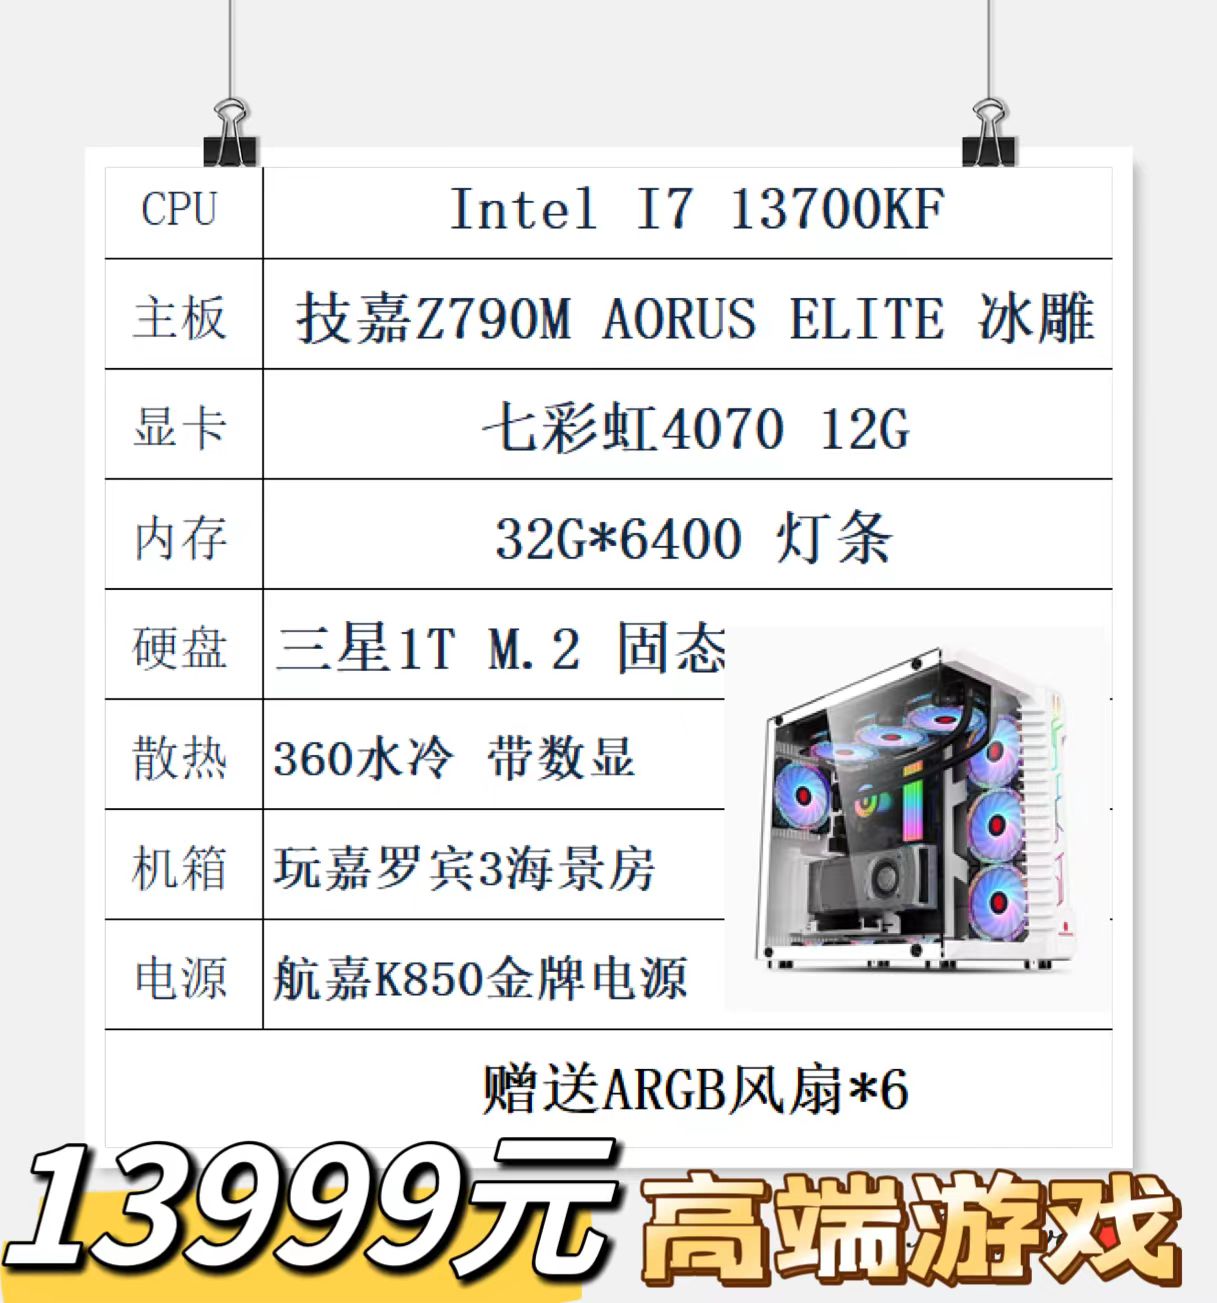 I7 13700KF 七彩虹4070 12G显卡 技嘉790冰雕主板 32G-6400内存 1T m.2固态